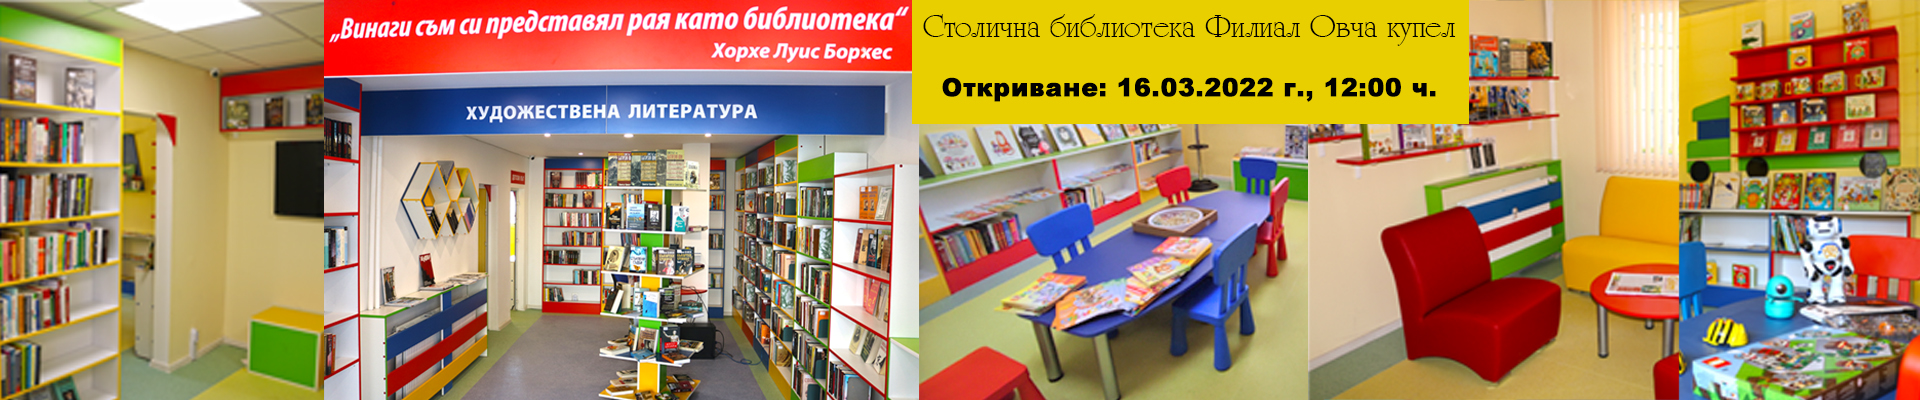 Столична библиотека открива пети филиал в София - в район „Овча купел“